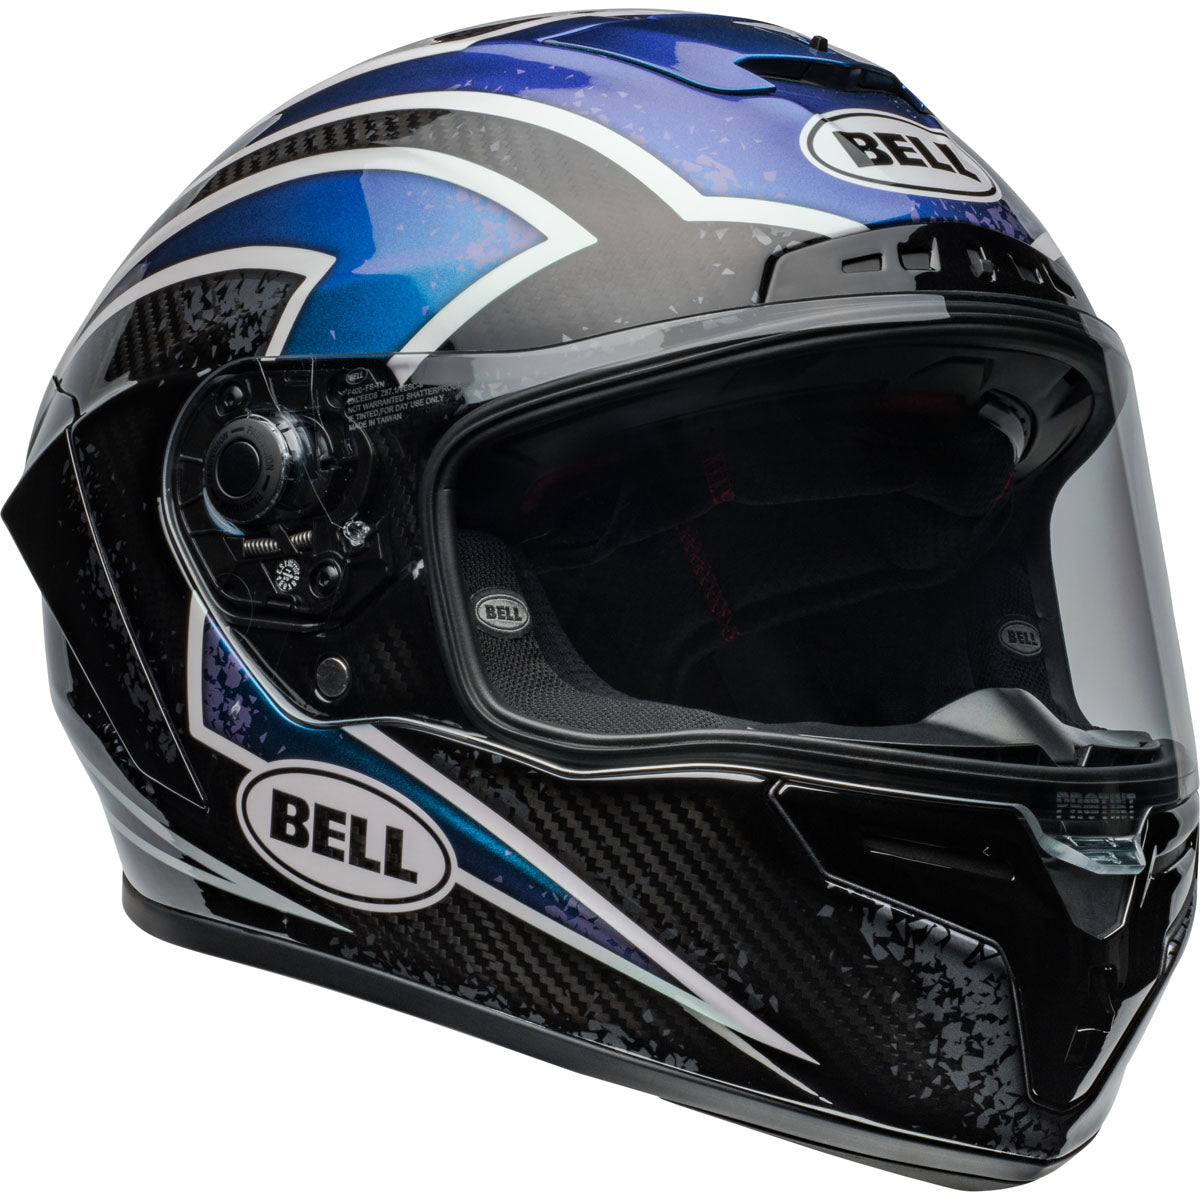 Bell Race Star DLX Flex Xenon Helmet - Gloss Orion/Black